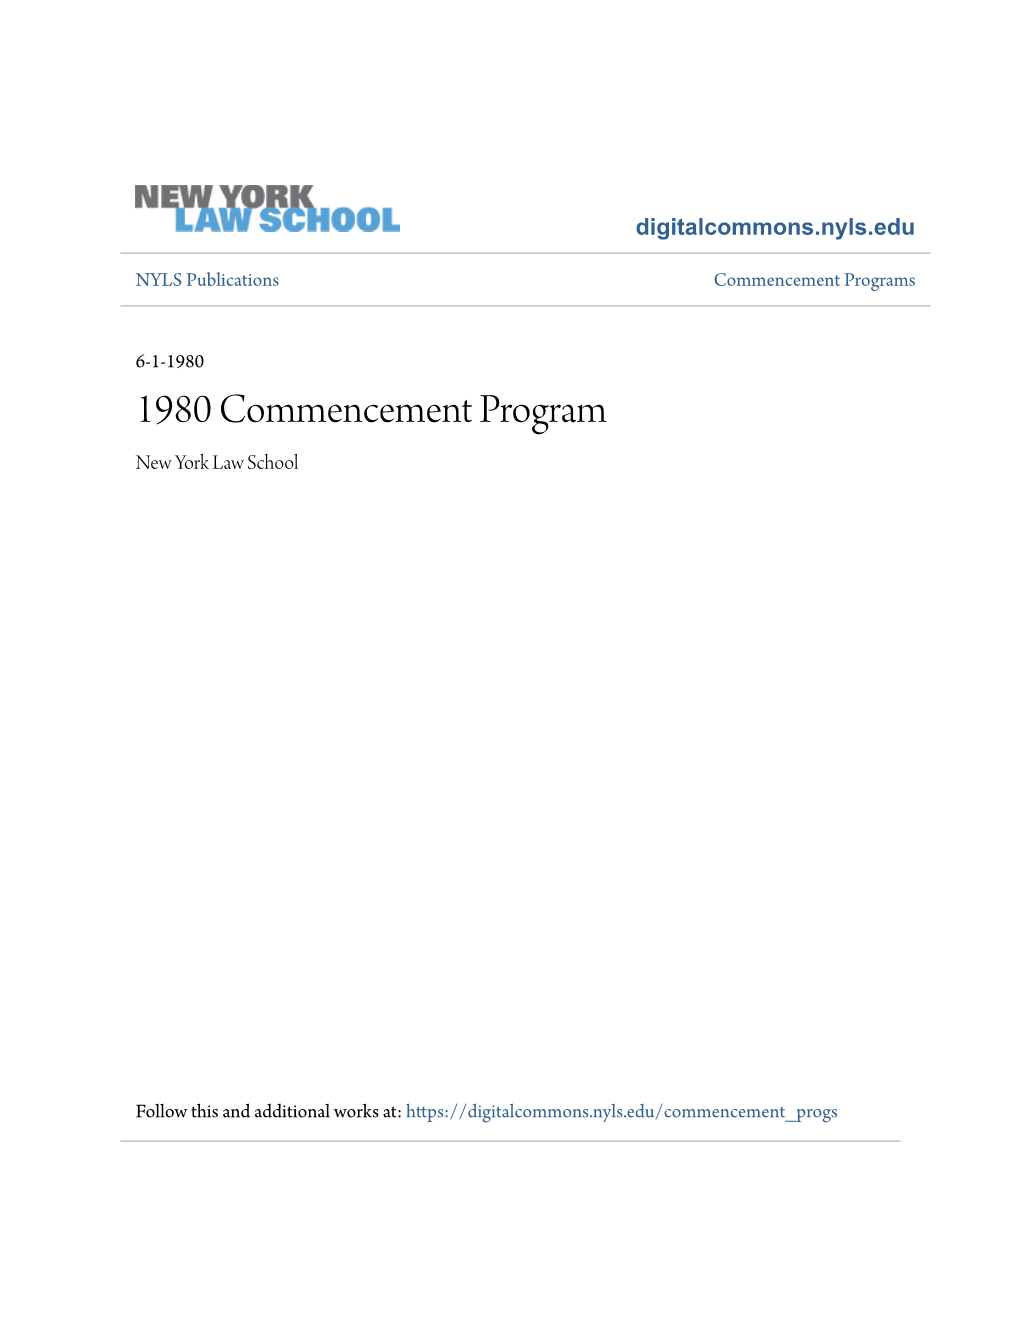 1980 Commencement Program New York Law School